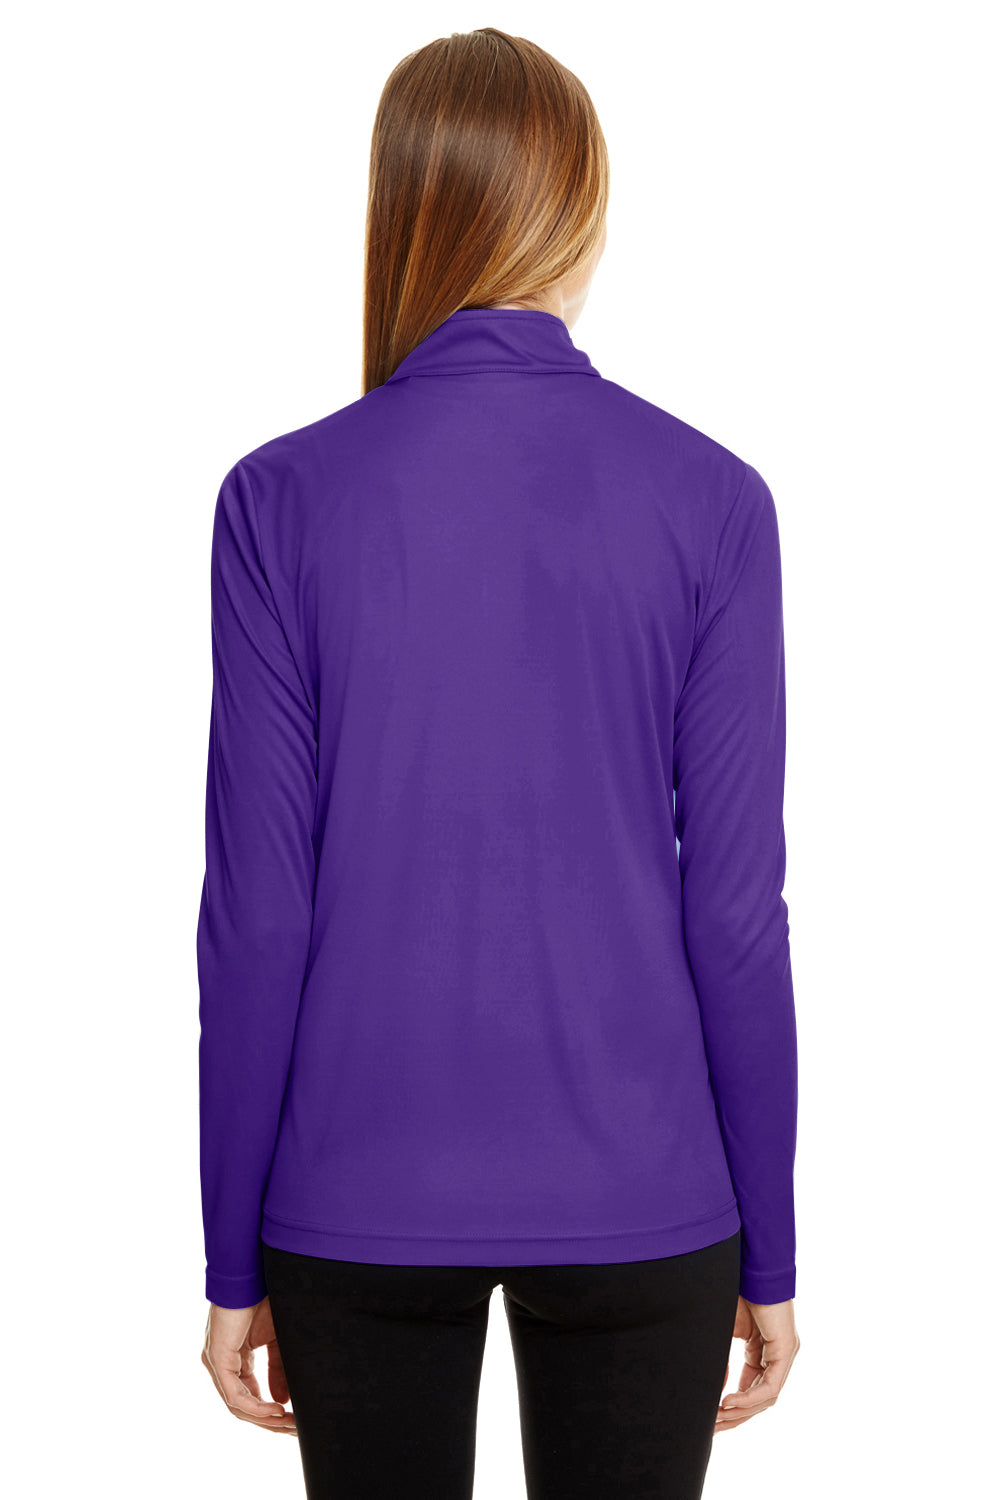 Team 365 TT31W Womens Zone Performance Moisture Wicking 1/4 Zip Sweatshirt Purple Back